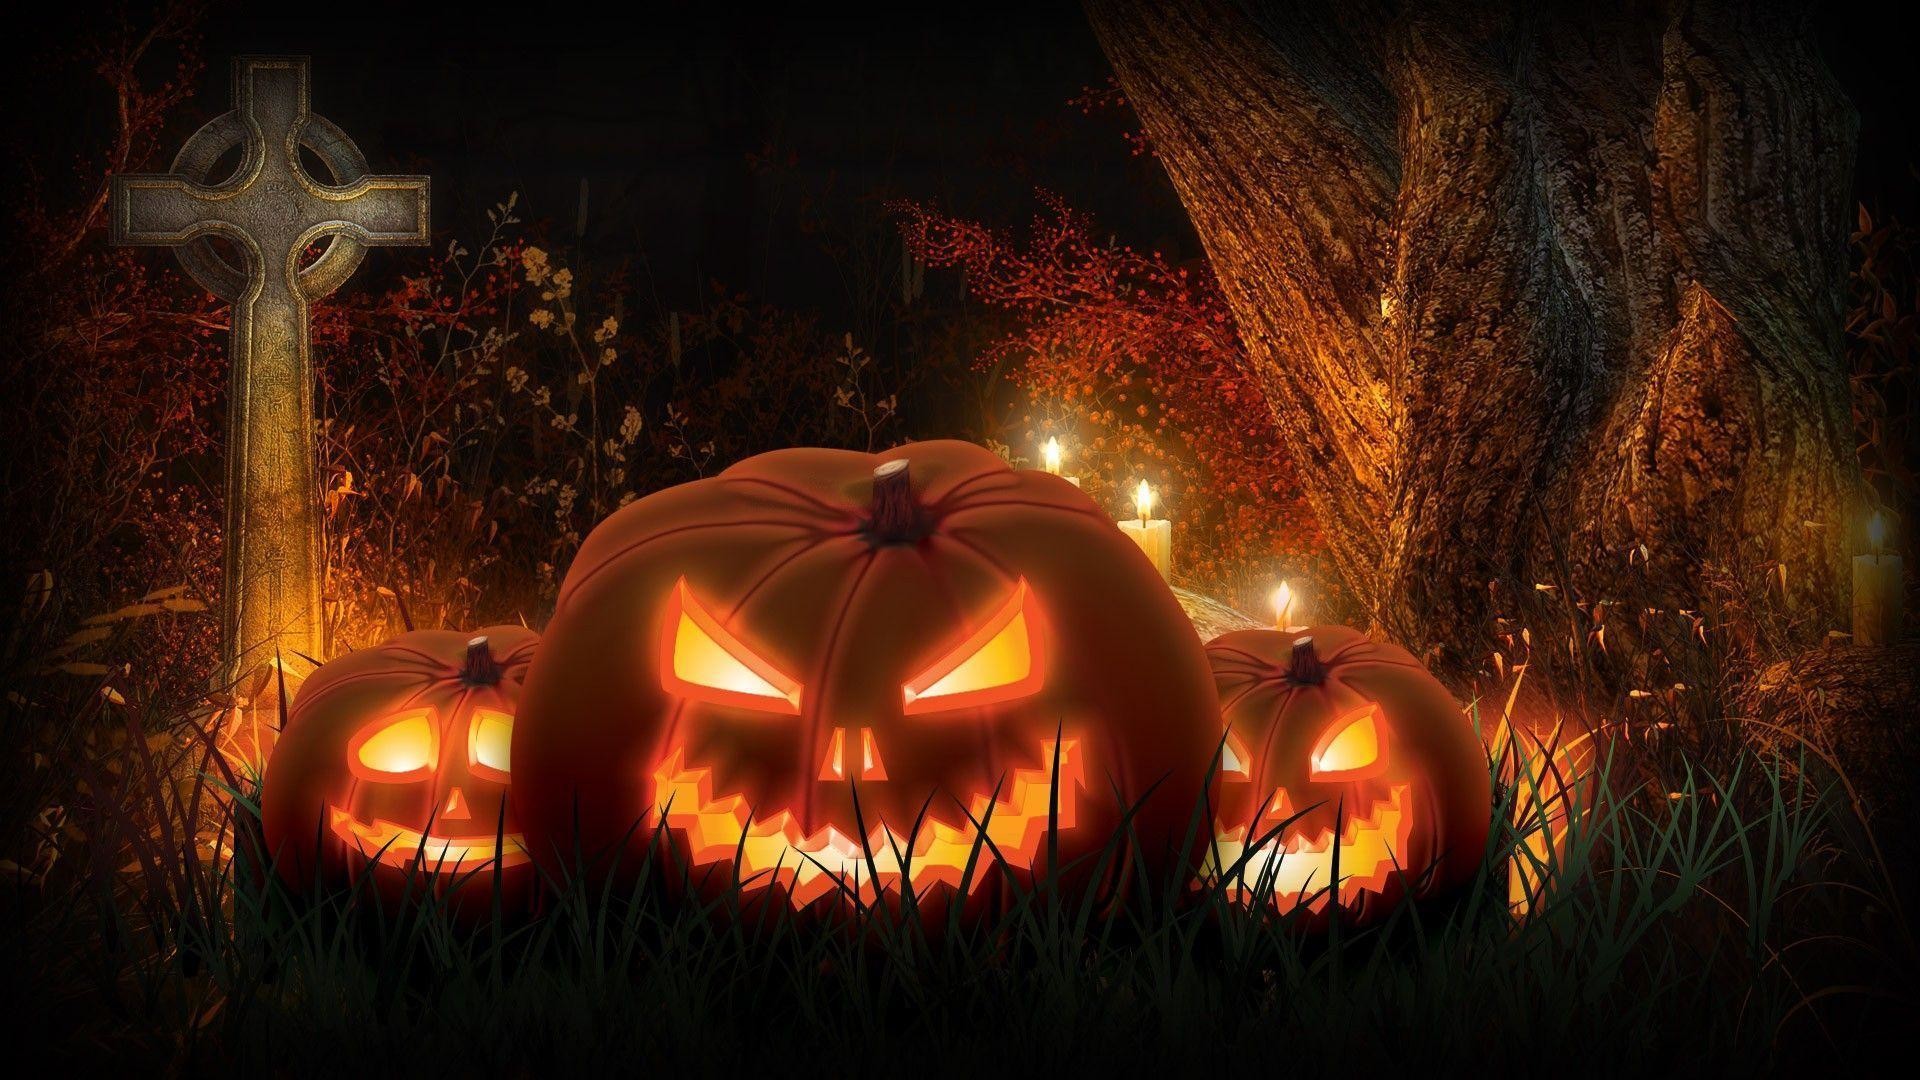 HD Halloween Wallpaper 1080p Image